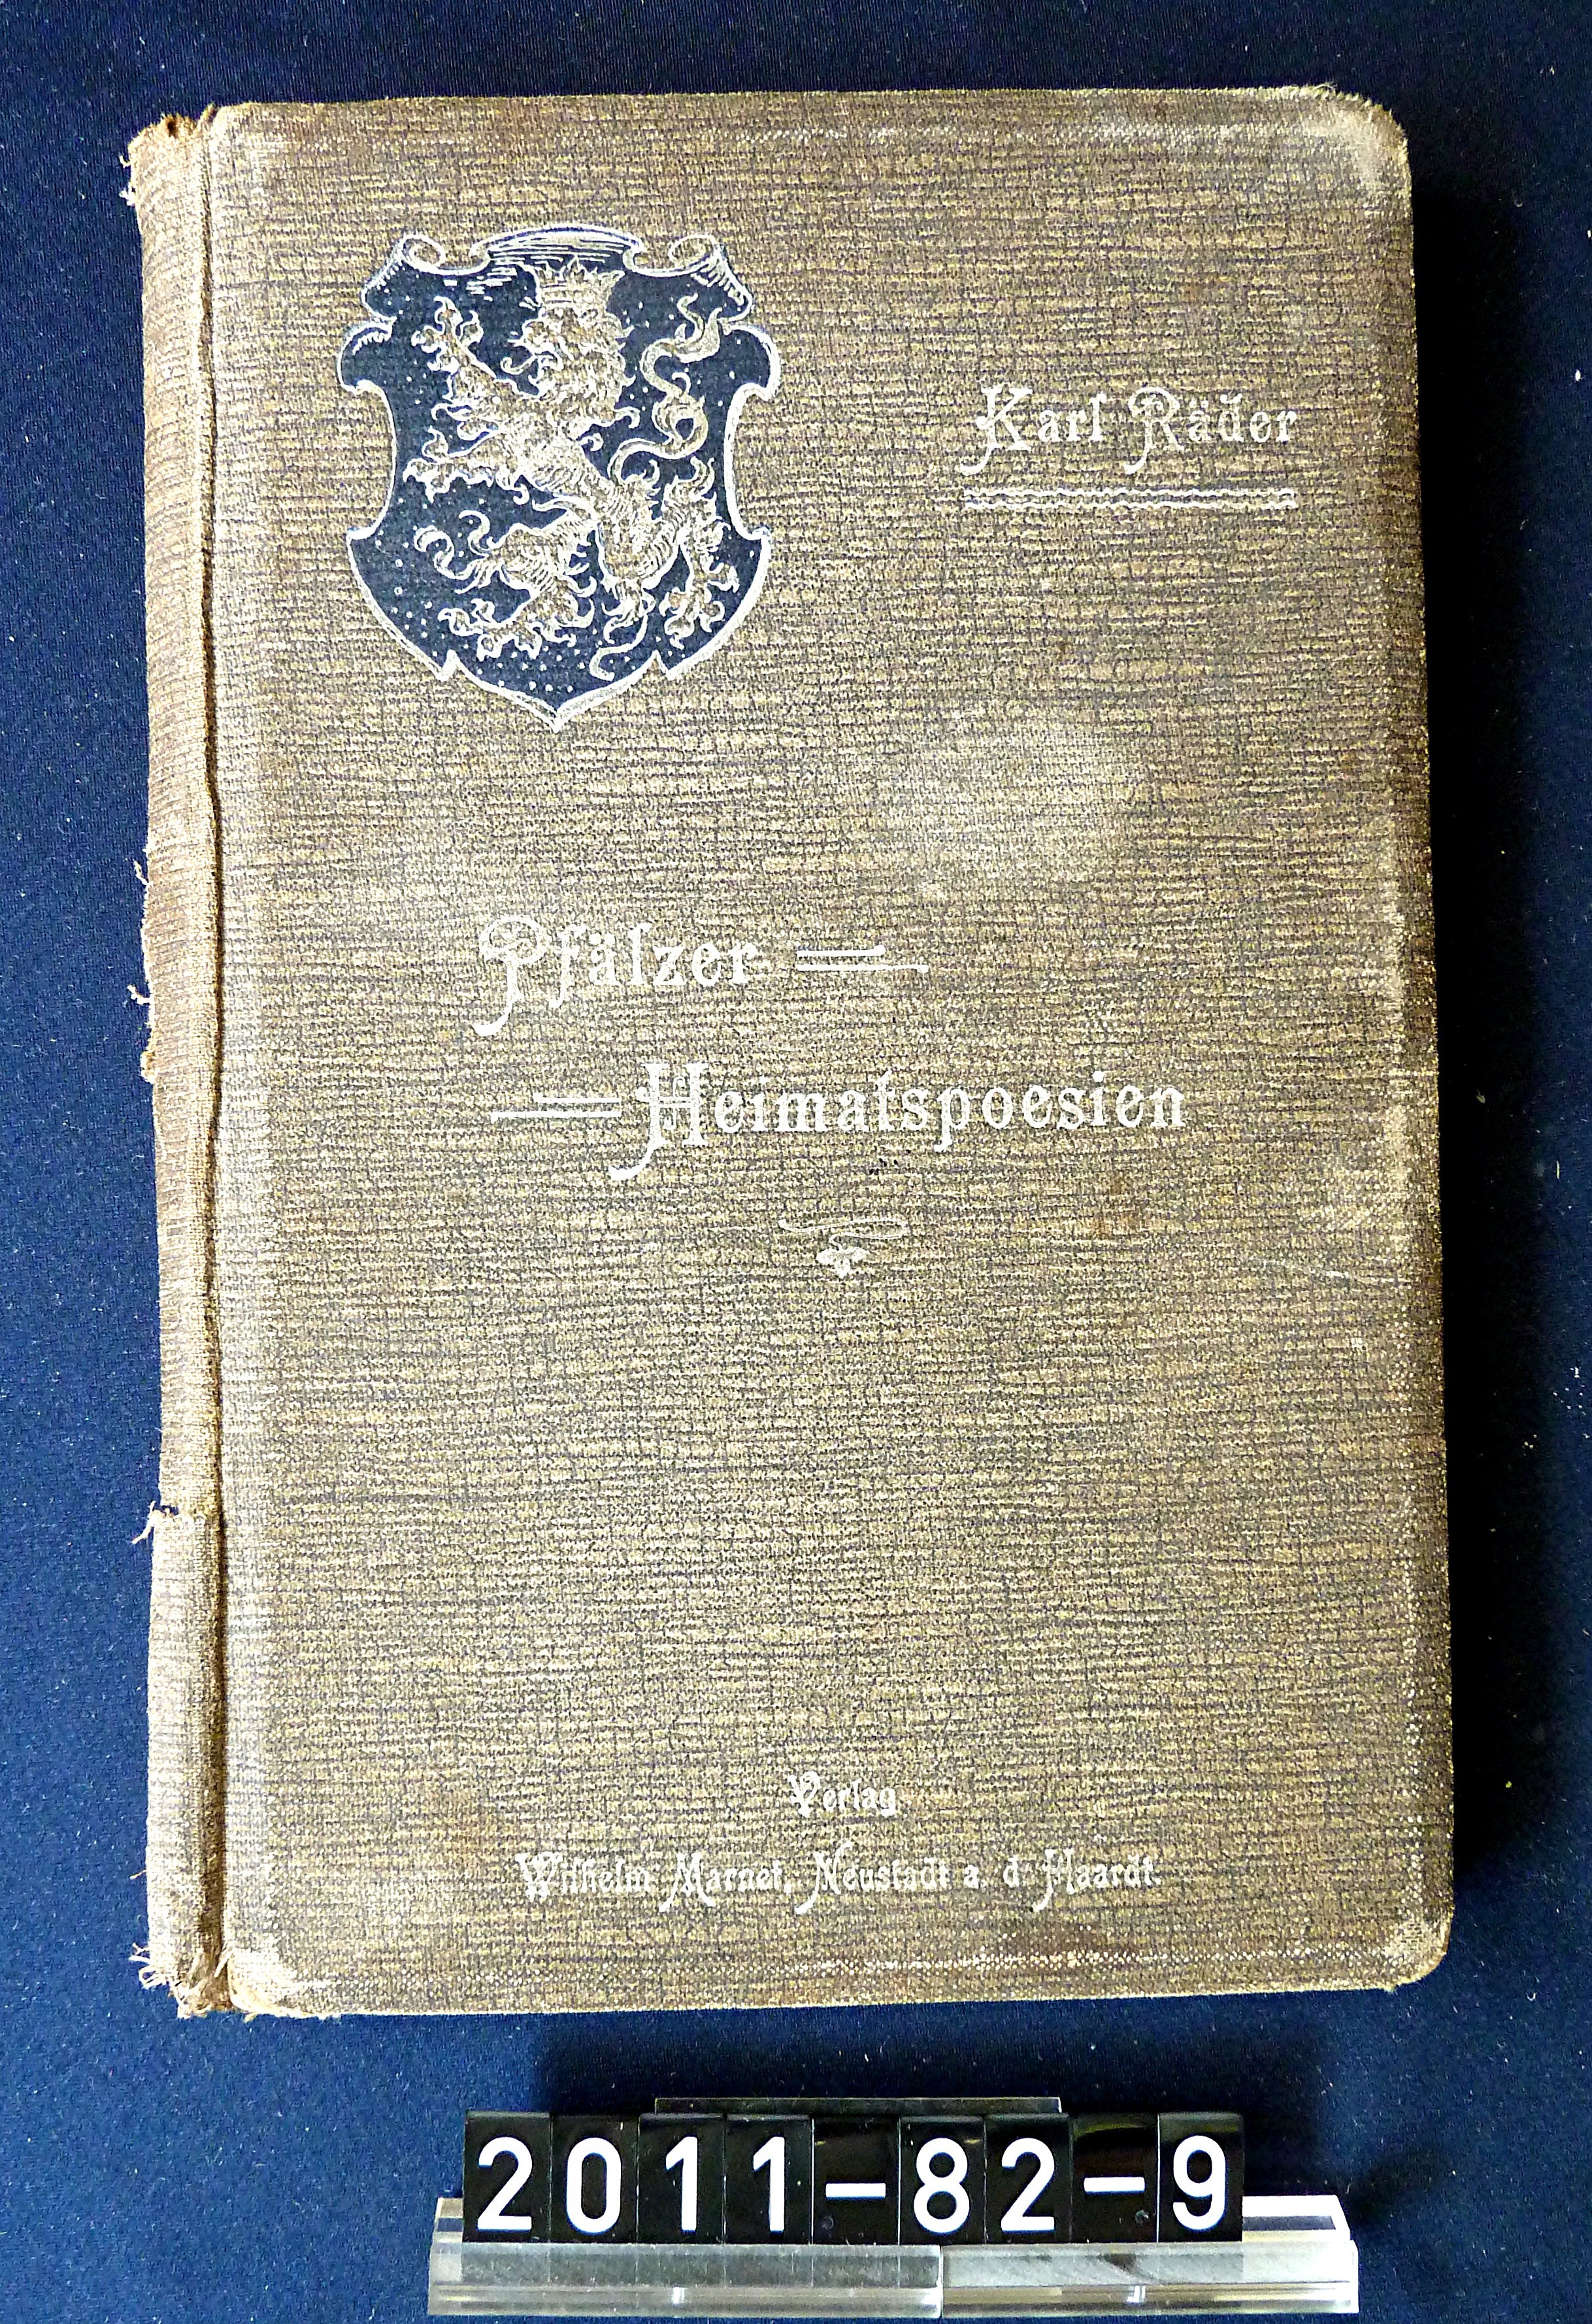 Buch; "Pfälzer Heimatpoesien"; Karl Räder, 1906 (Stadtmuseum Bad Dürkheim, Museumsgesellschaft Bad Dürkheim e.V. CC BY-NC-SA)